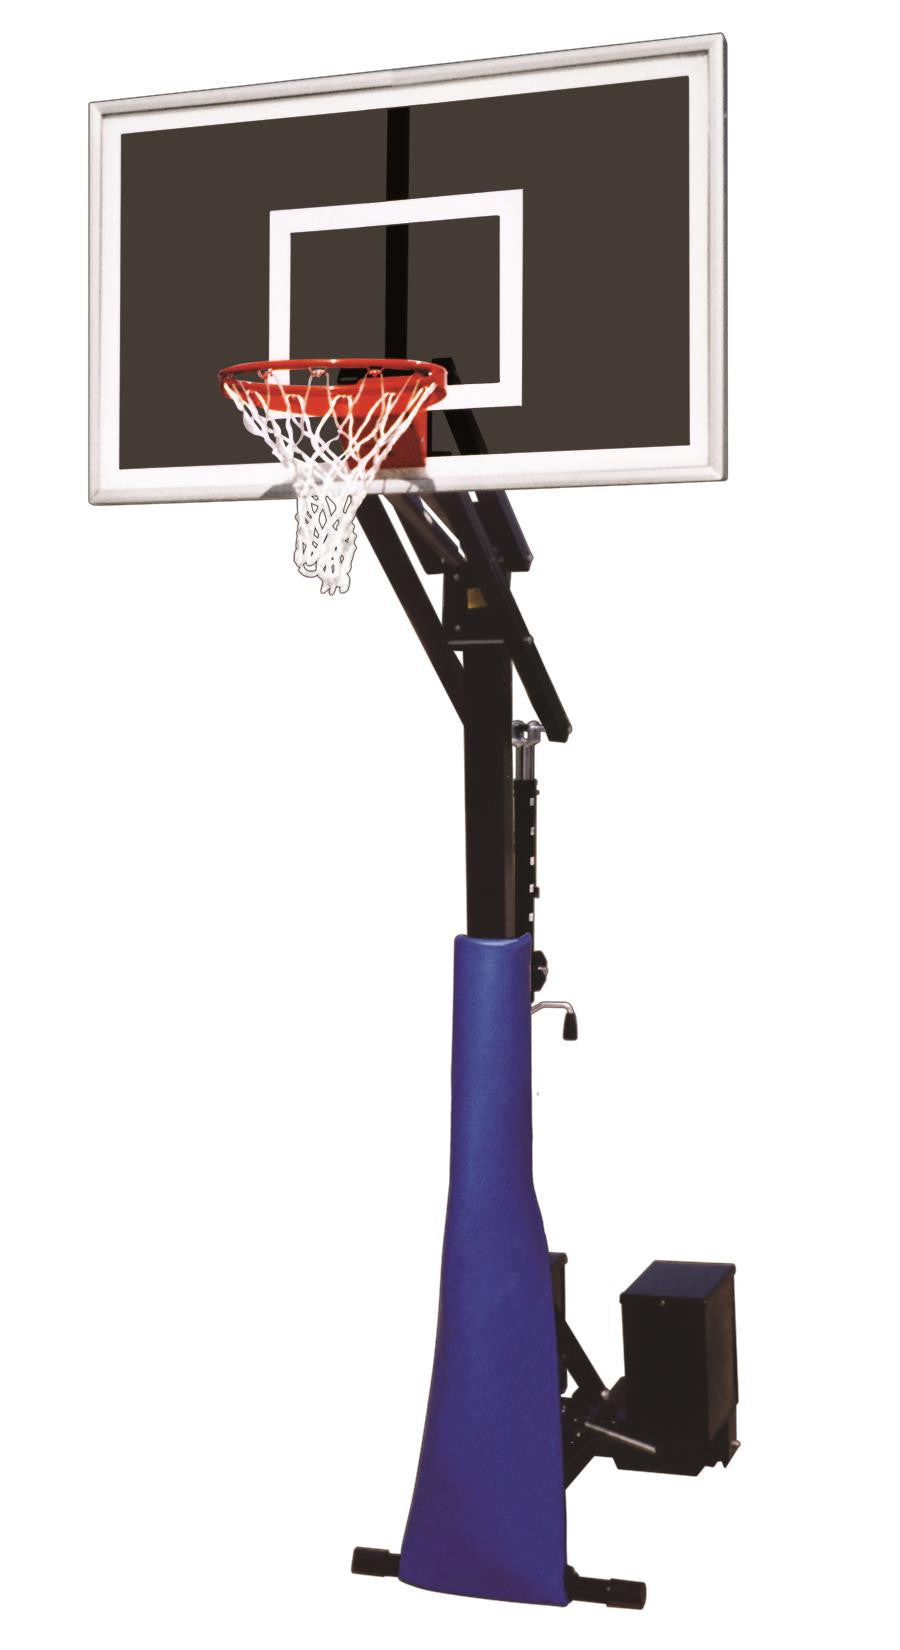 Basketball Hoops & Systems, Portable & Adjustable